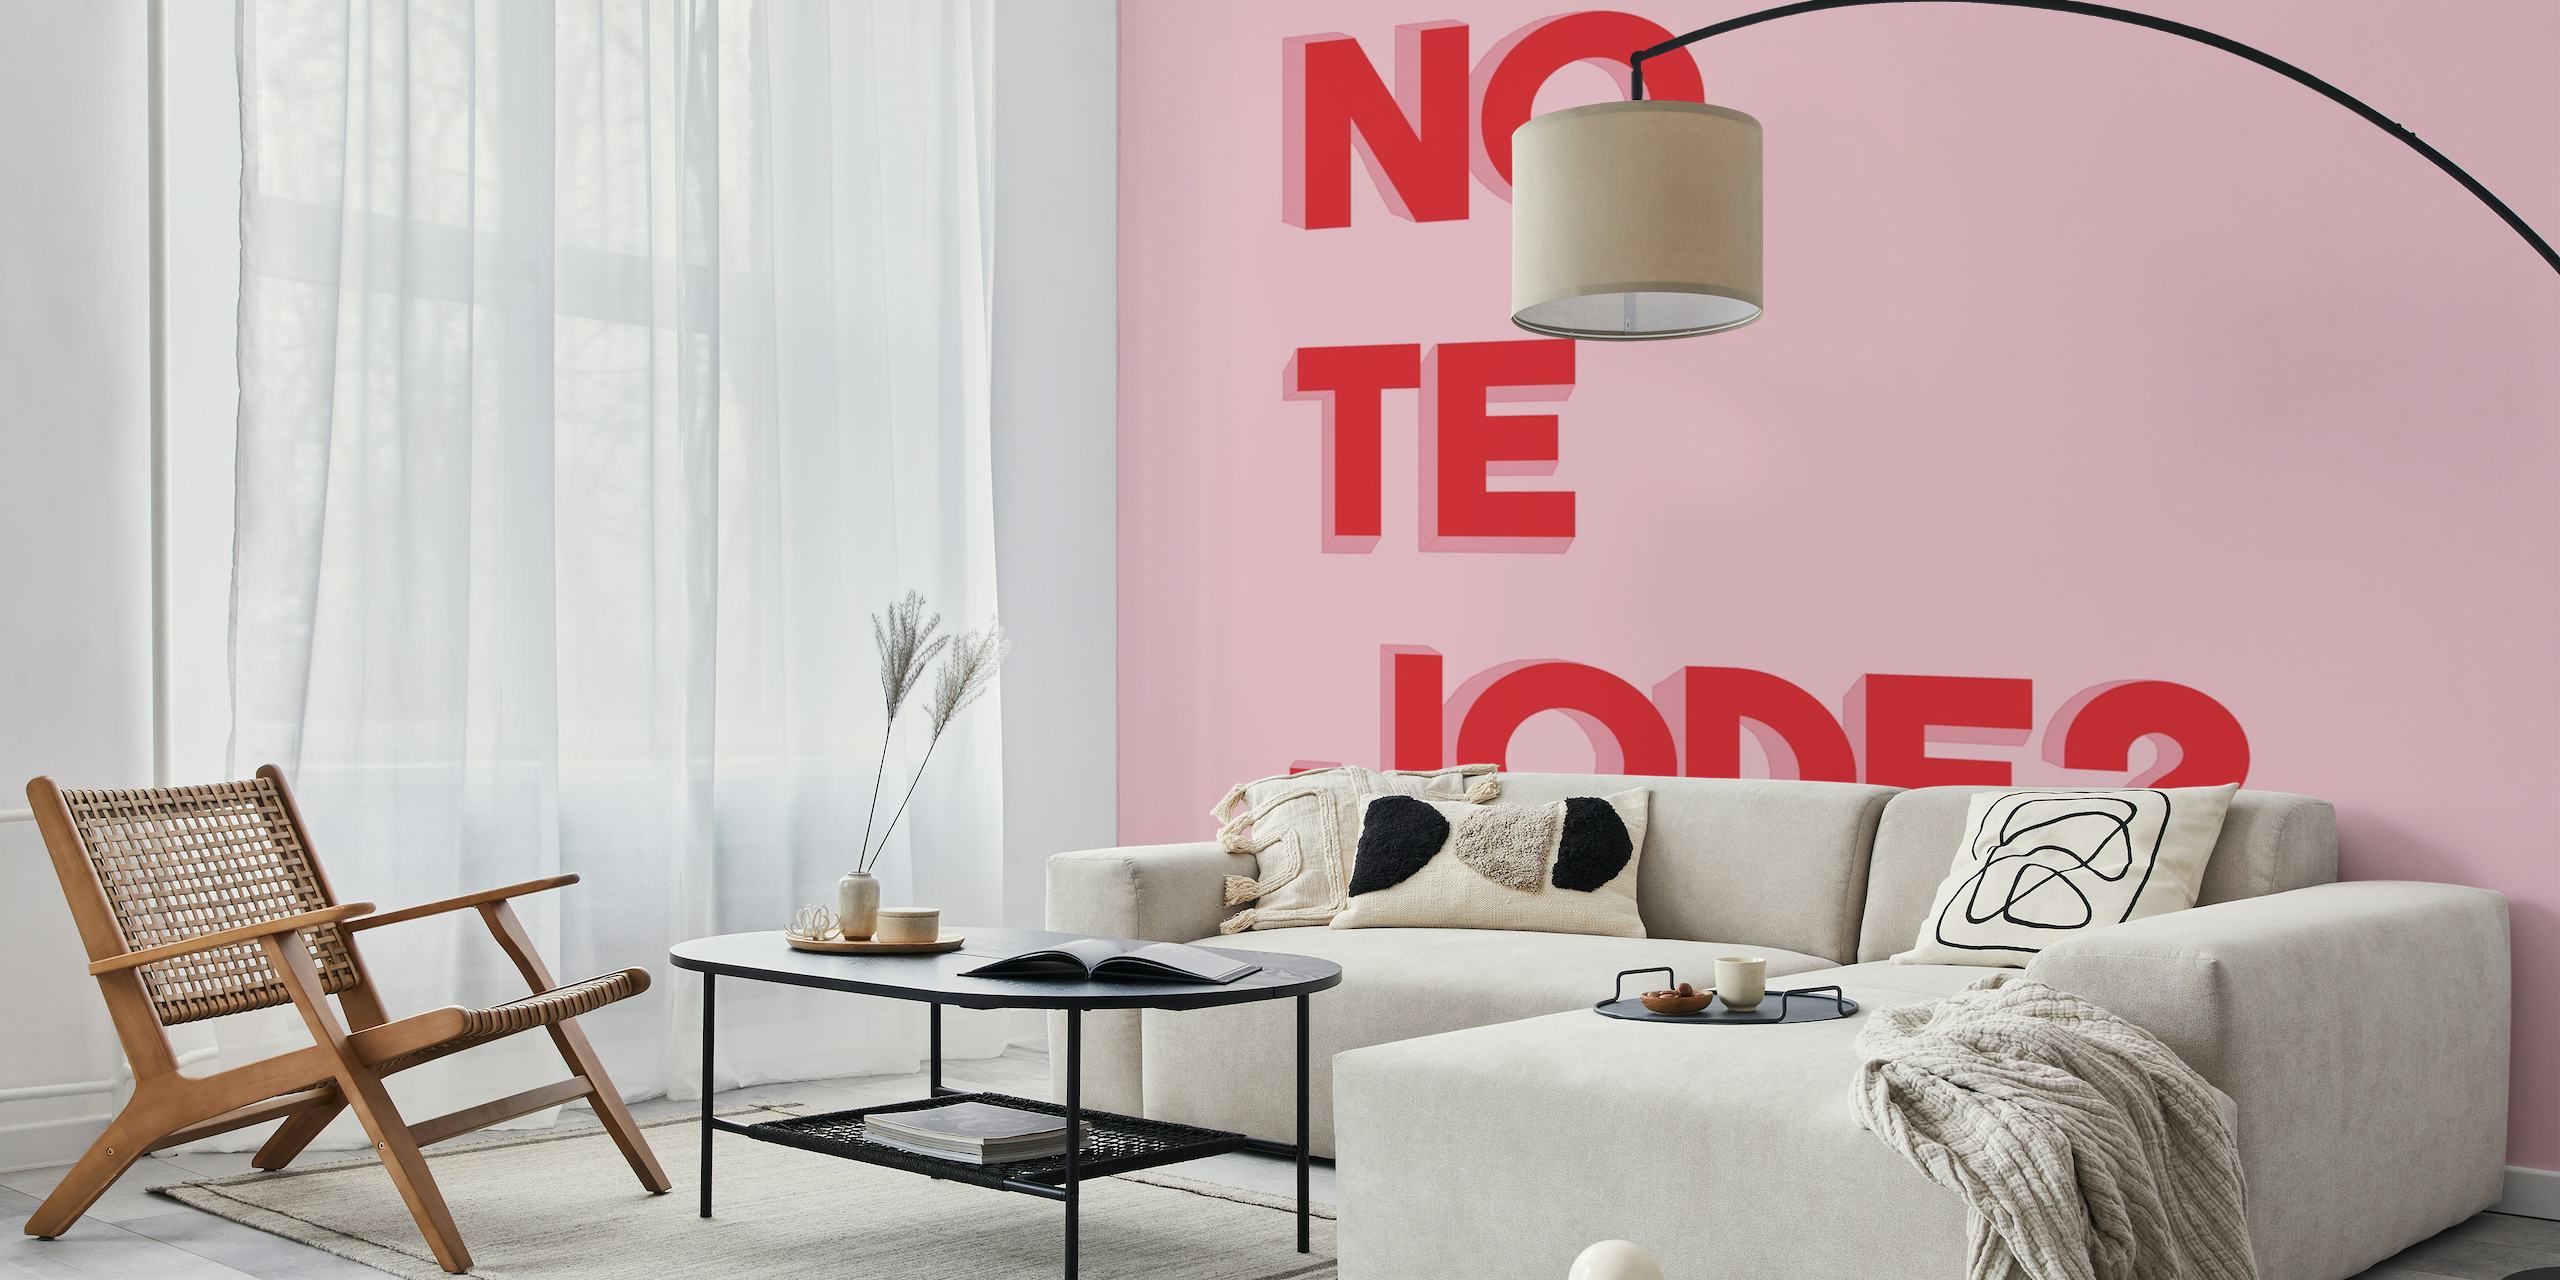 Fettgedruckter roter Text „No te jode?“ auf einem rosa Hintergrund Wandbild